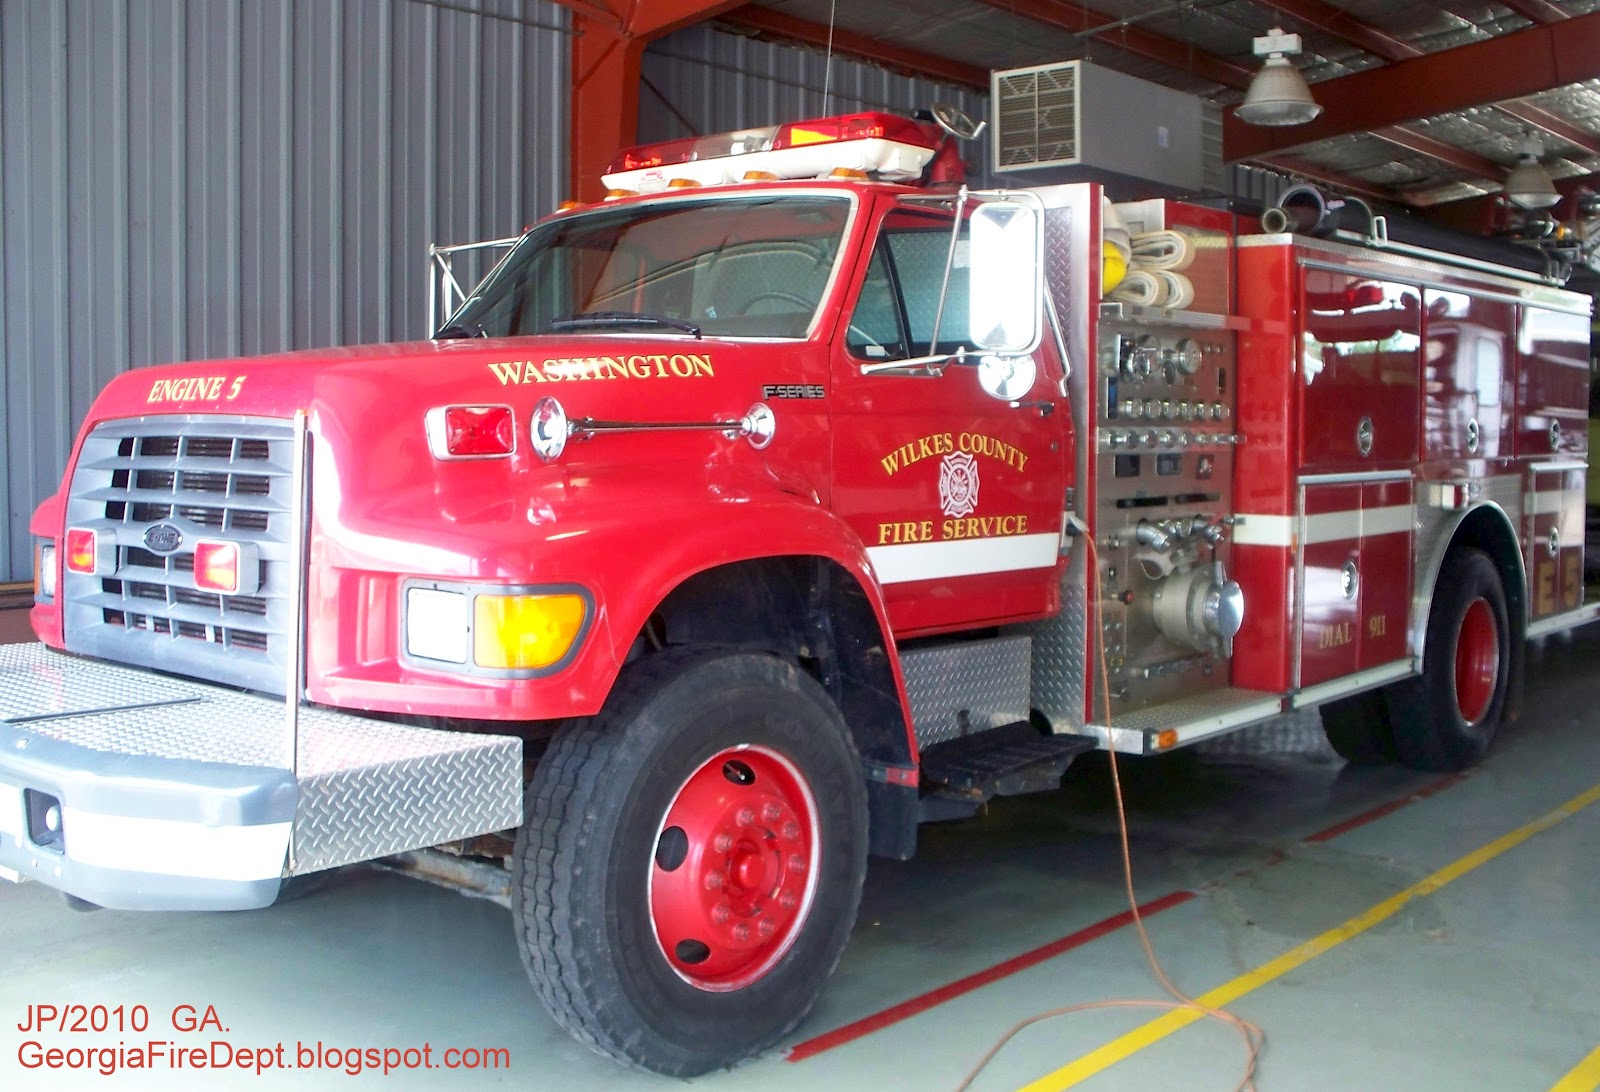 http://4.bp.blogspot.com/-HsK5qQKcKMM/T0e9YZwSbbI/AAAAAAAE1-k/iqAS5grqt0E/s1600/WASHINGTON+GEORGIA,+Ford+Fire+Truck+Engine+5+at+Washington+Georgia+Fire+Department+Station.JPG